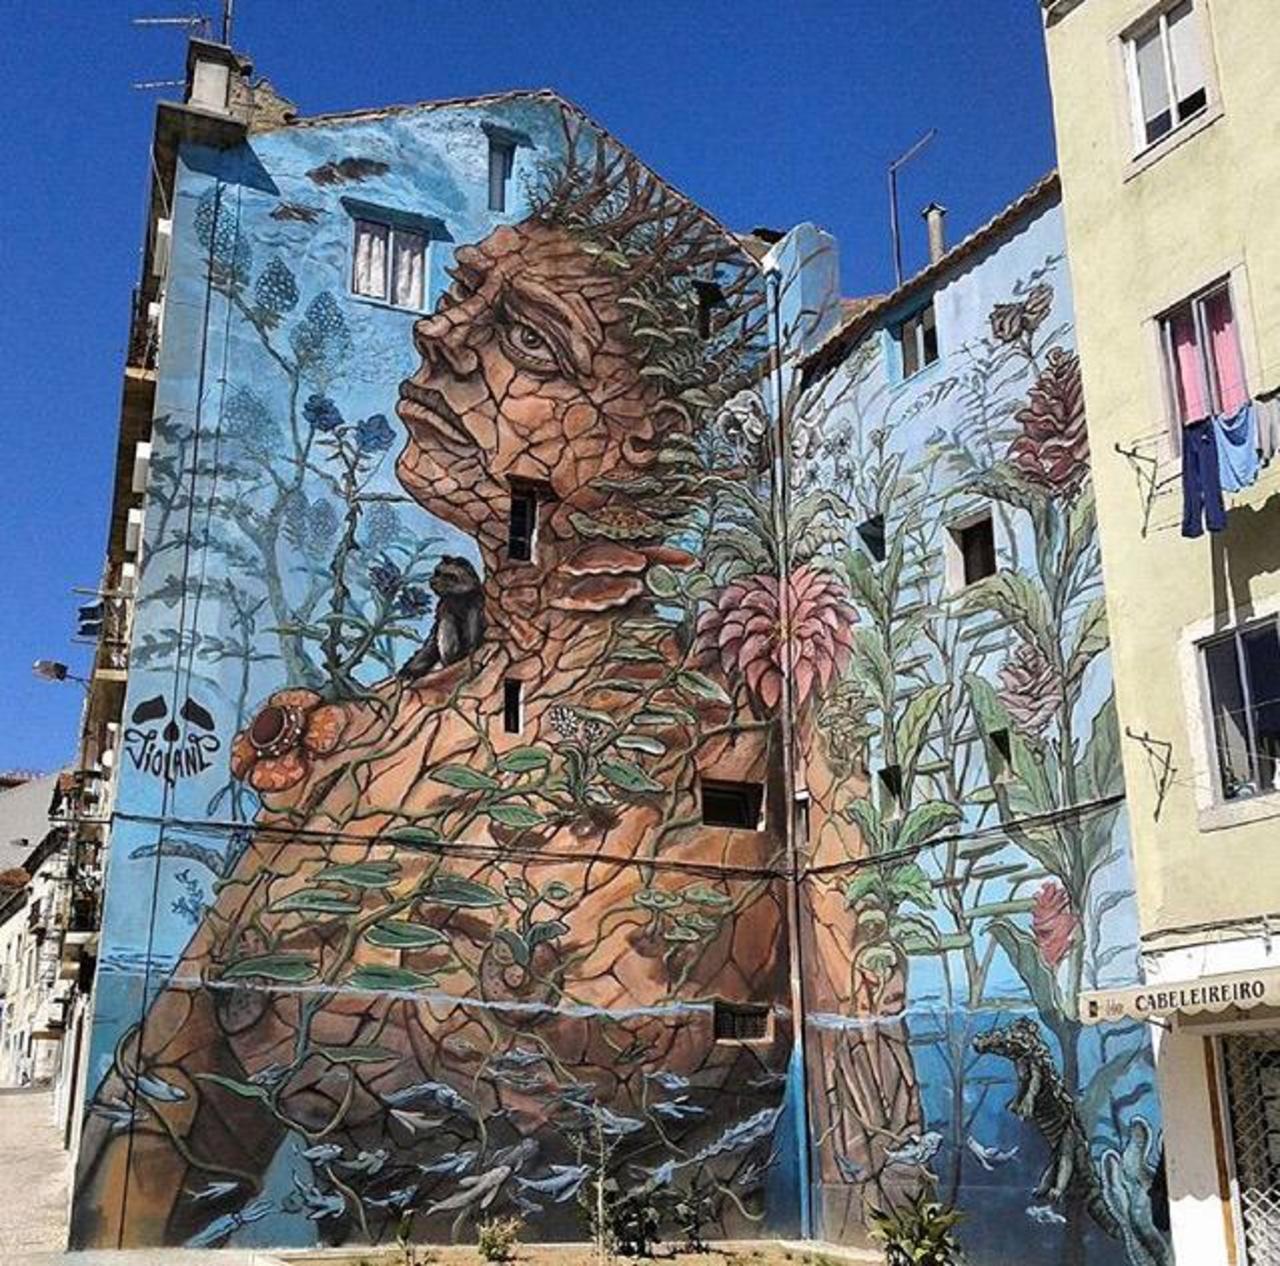 RT @GoogleStreetArt: Street Art by Violant 

#art #graffiti #mural #streetart http://t.co/MaqQovpHr4